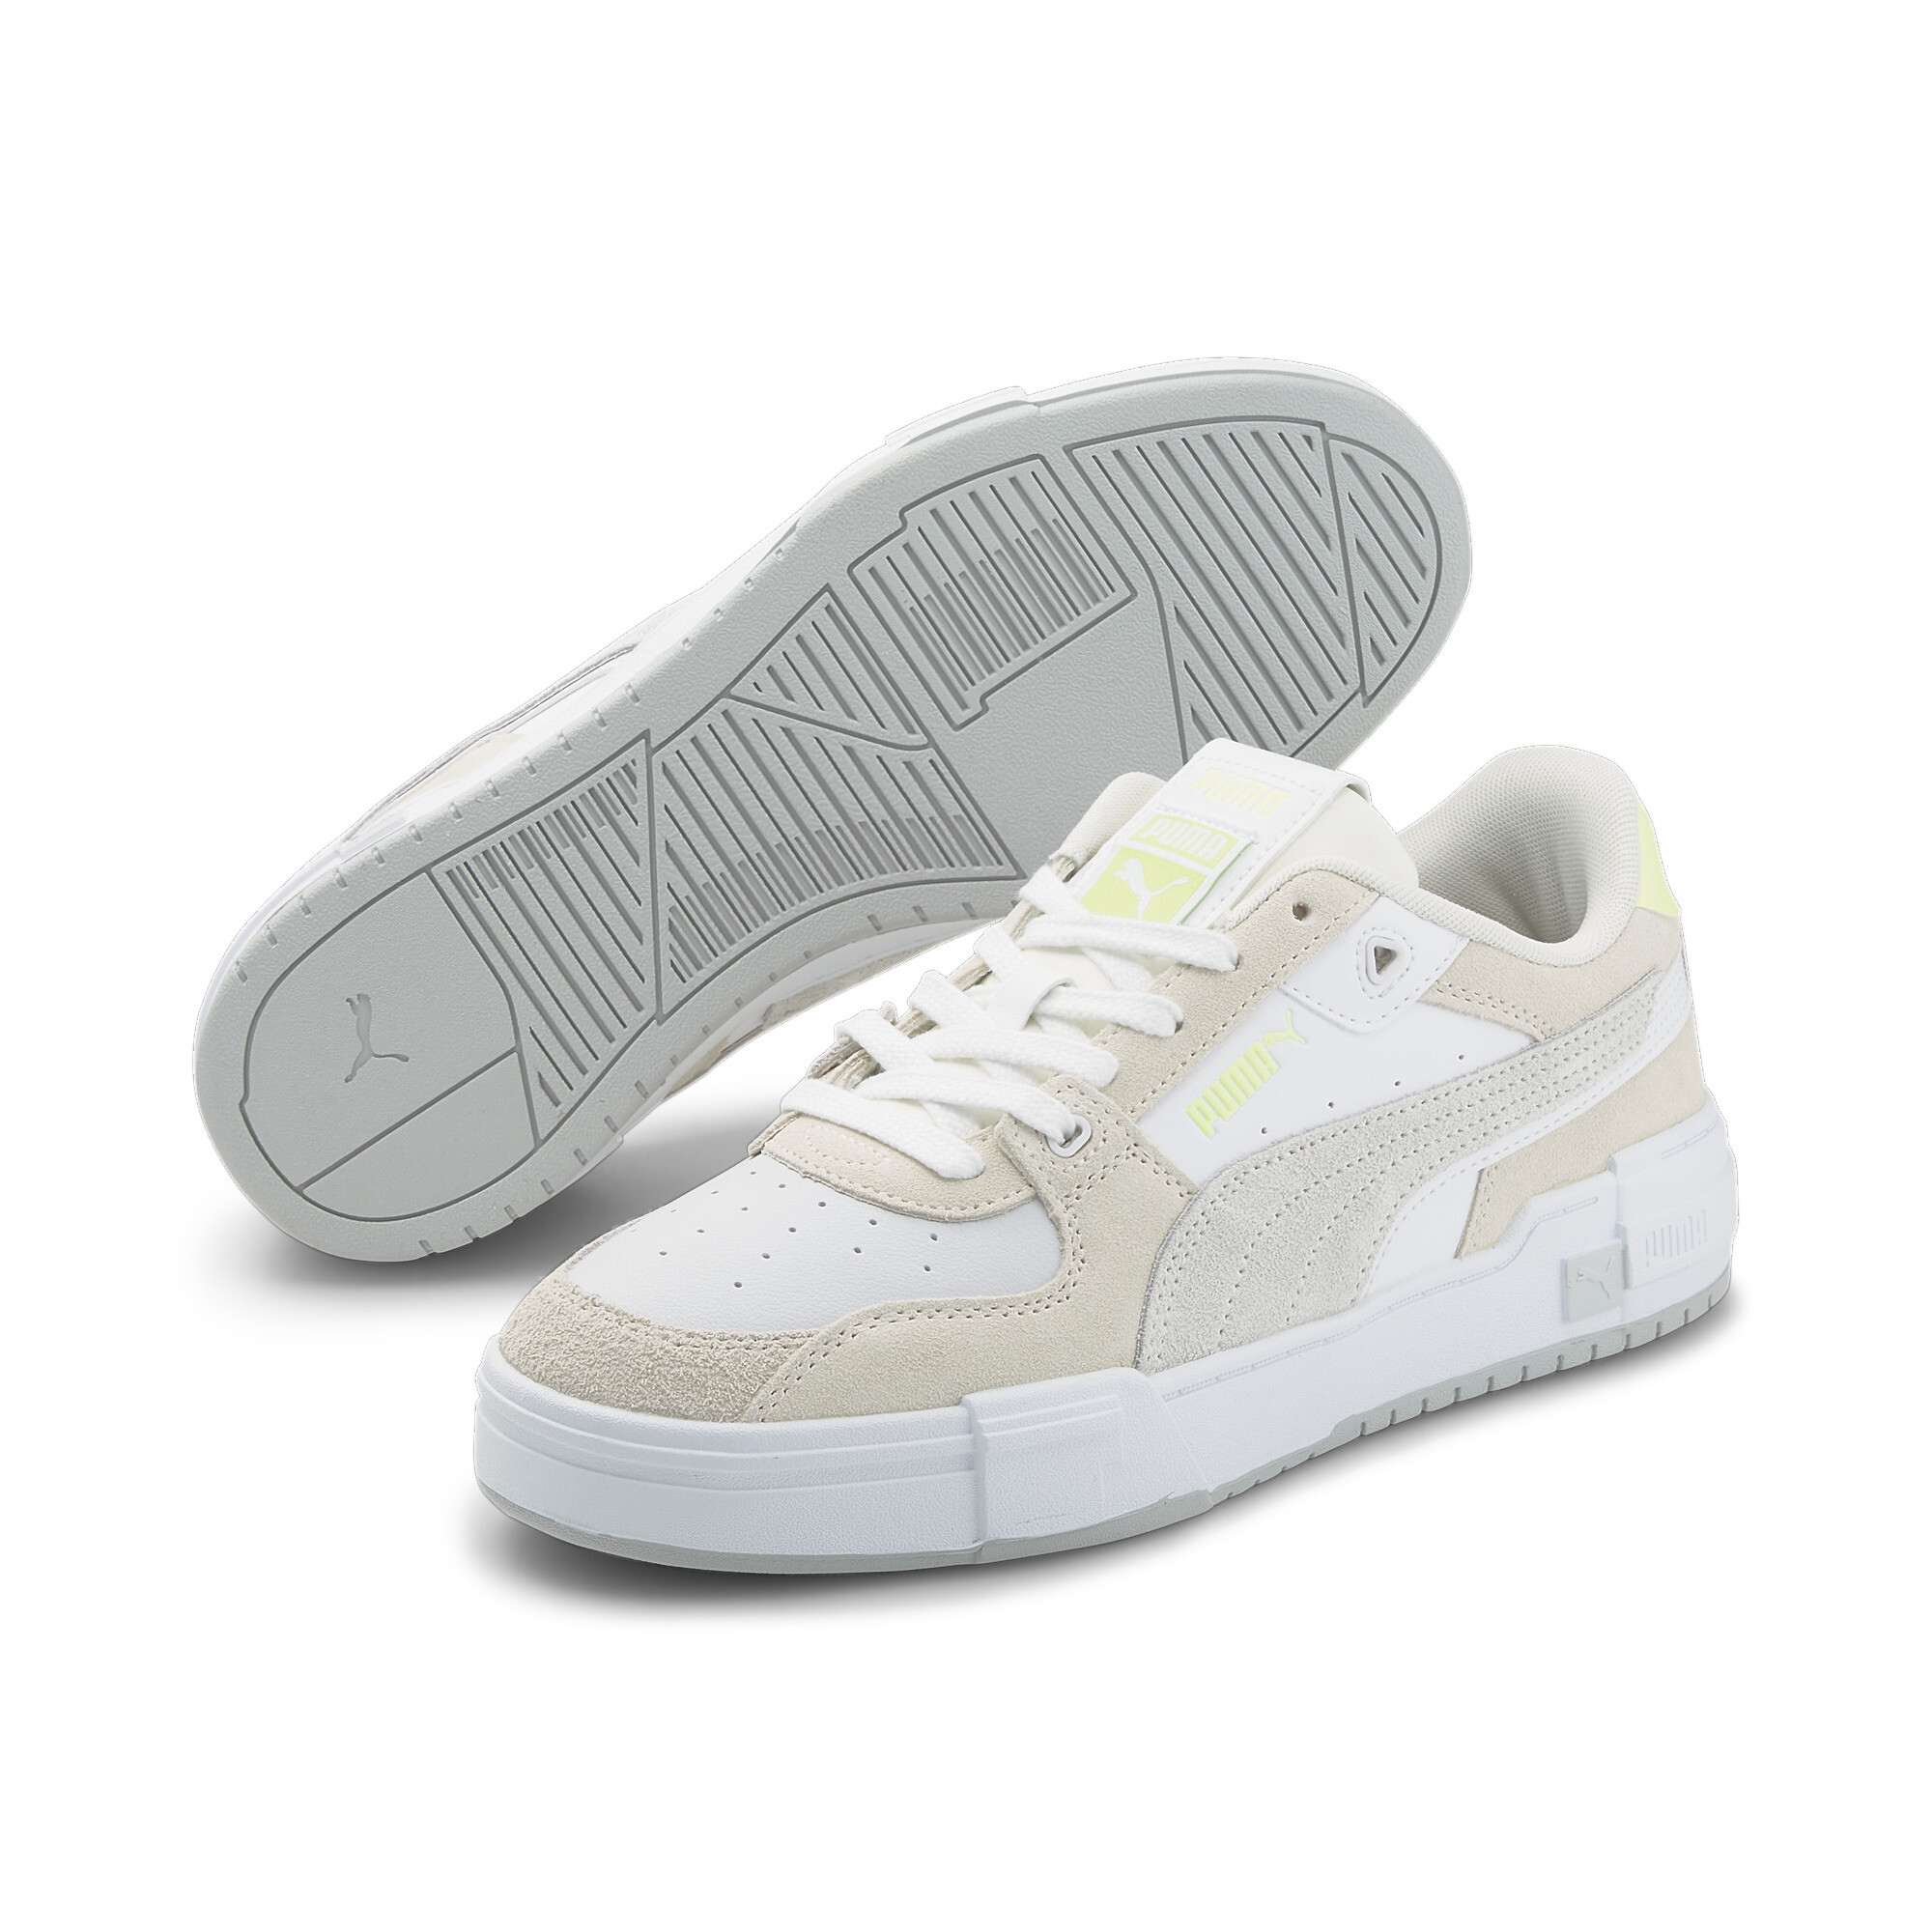 Men's Puma CA Pro Glitch Suede Sneakers, White, Size 35.5, Shoes